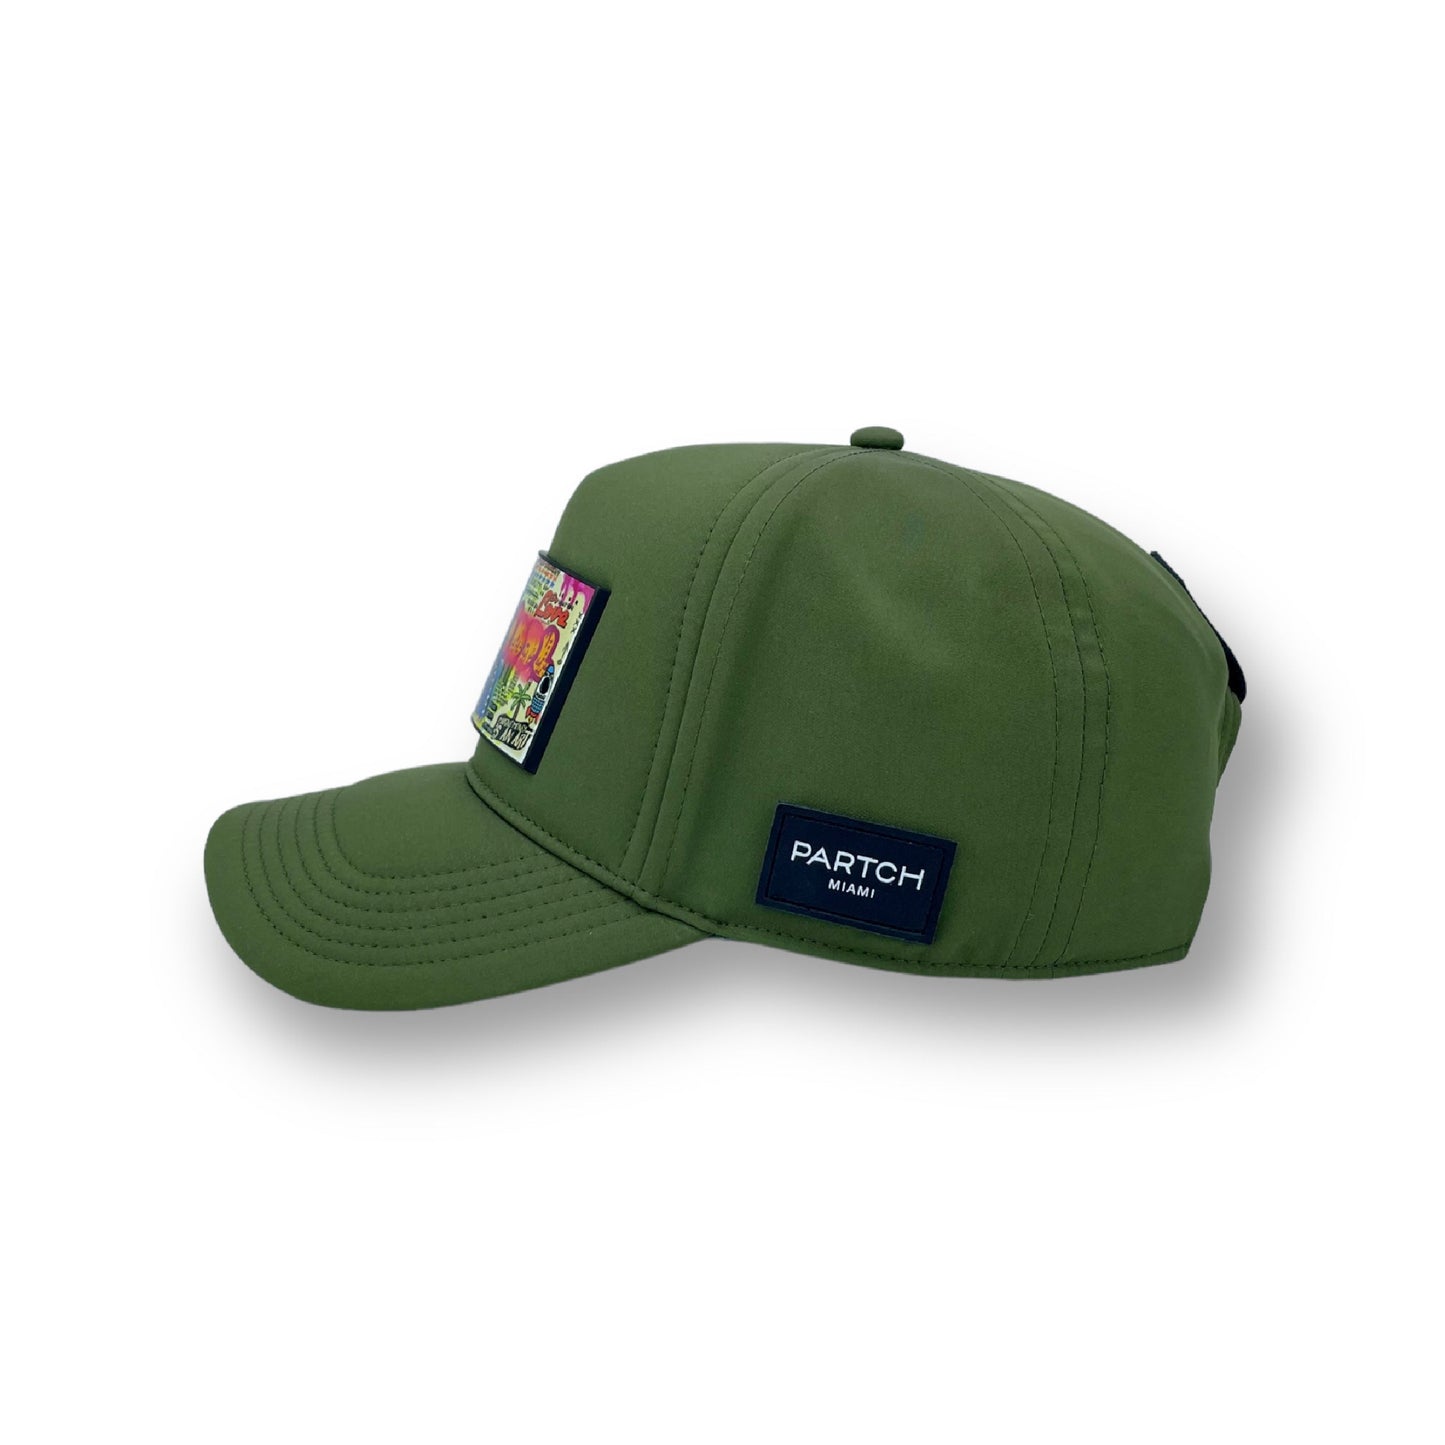 Mona PARTCH trucker hat green with Art PARTCH-Clip concept interchangeable